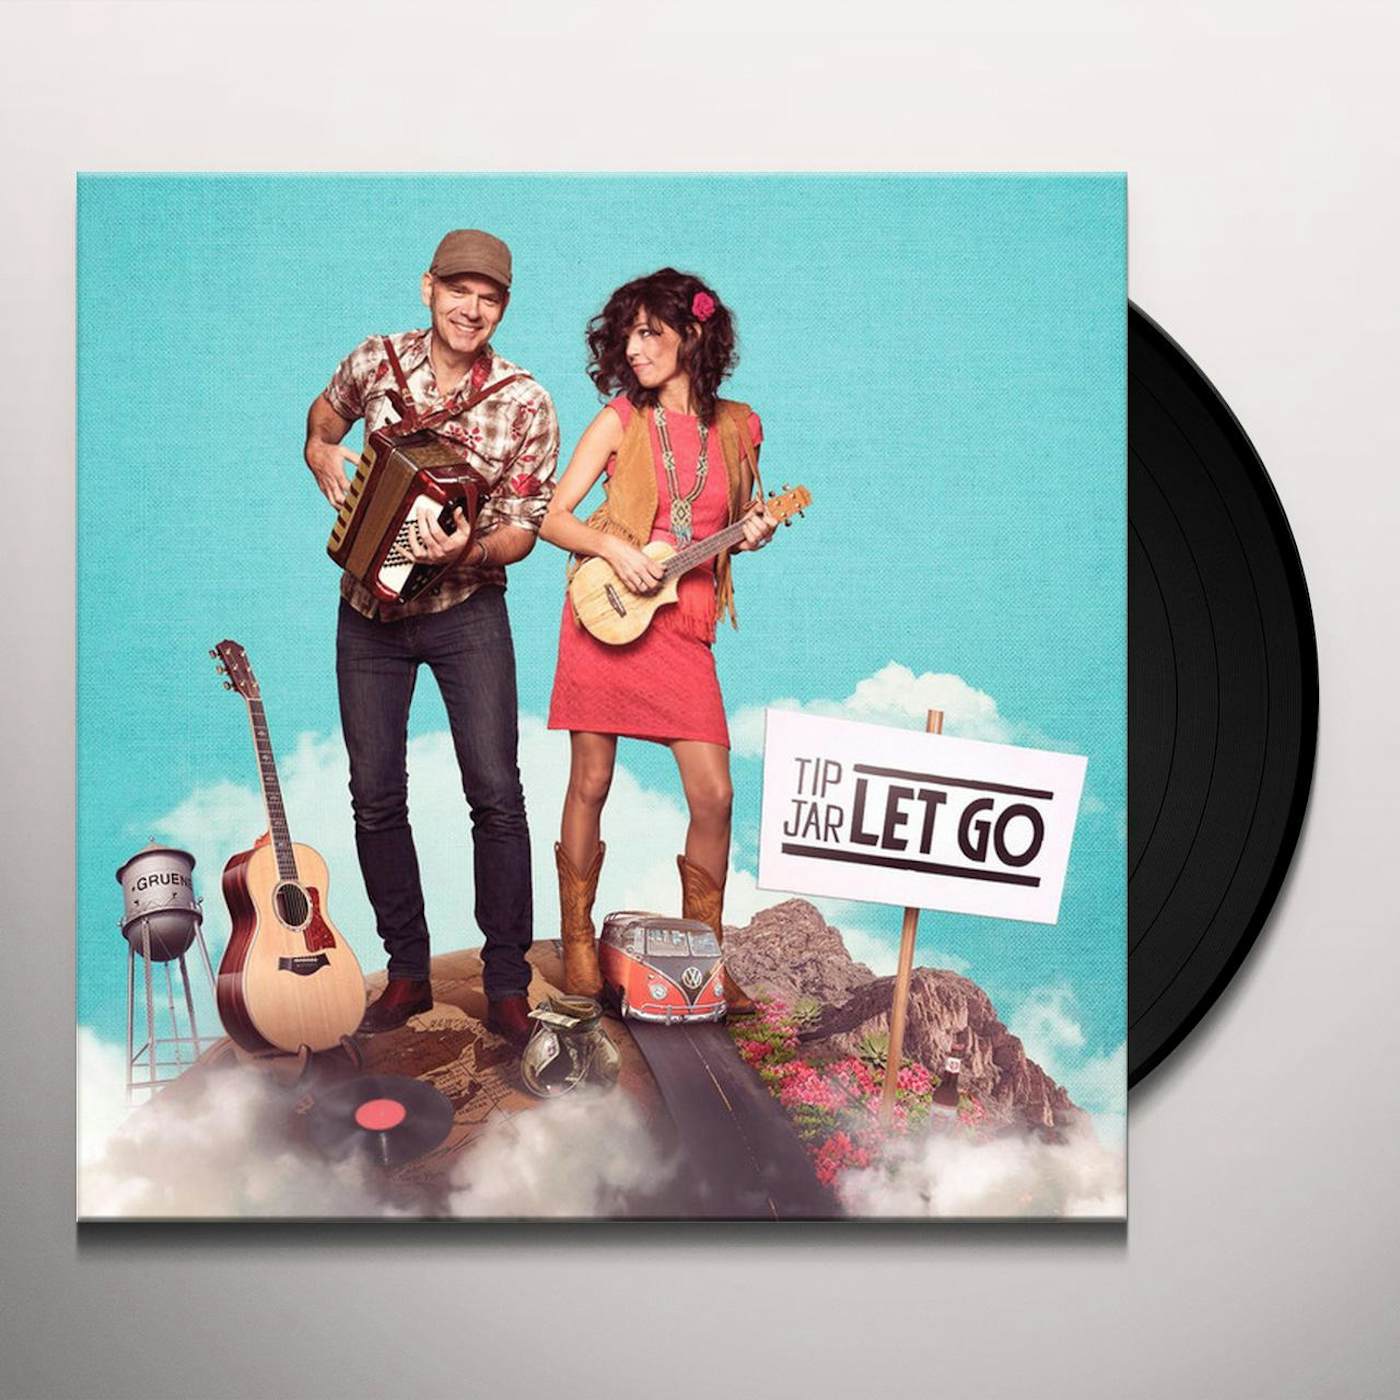 Tip Jar Let Go Vinyl Record